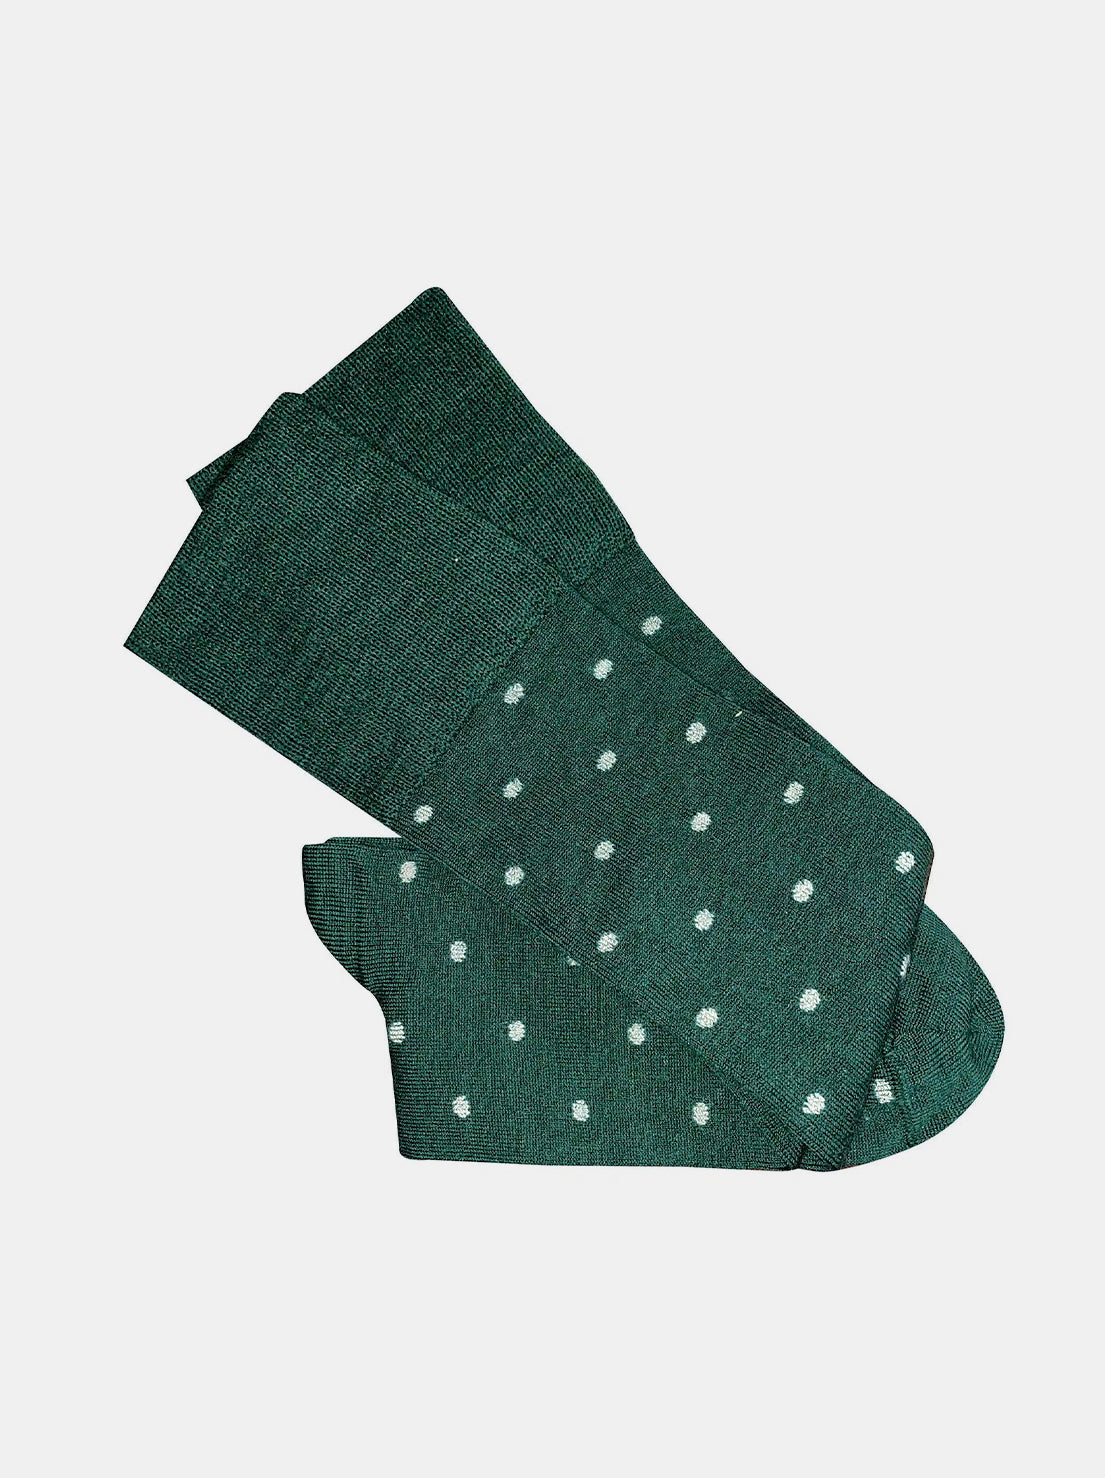 Tightology - Dotty Wool Socks - Green / Grey